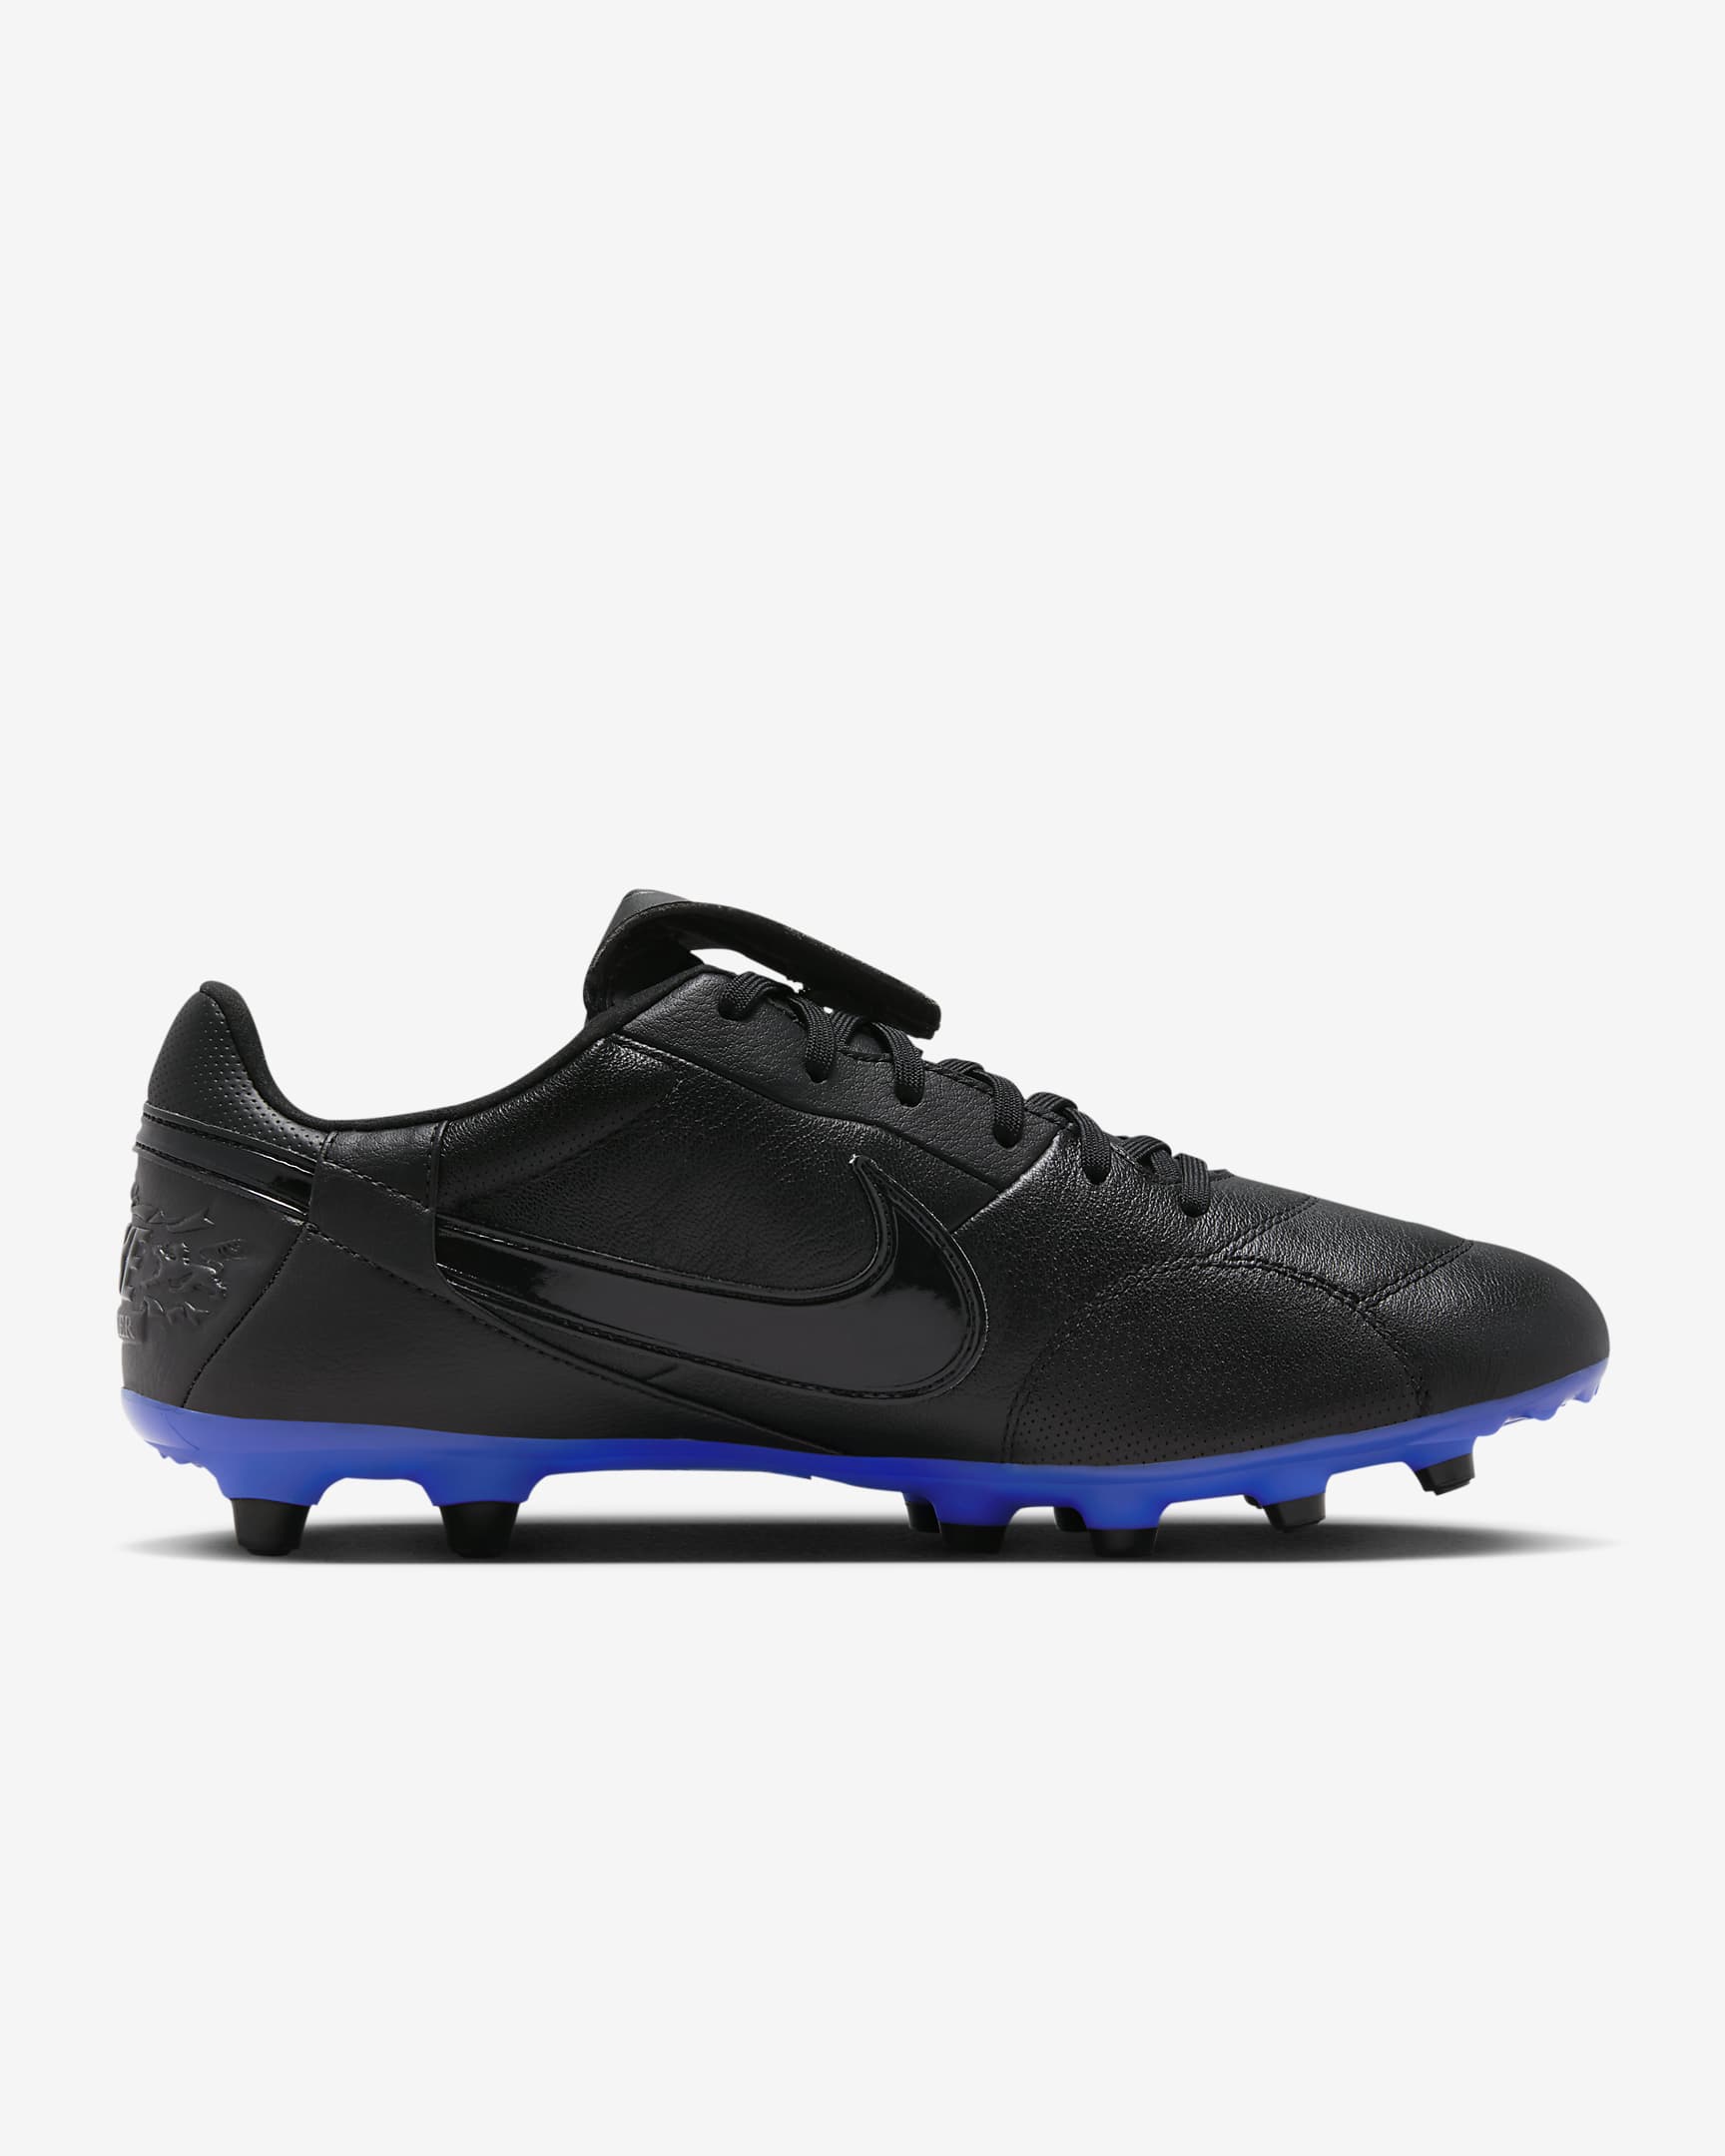 NikePremier 3 Firm-Ground Low-Top Football Boot - Black/Hyper Royal/Black